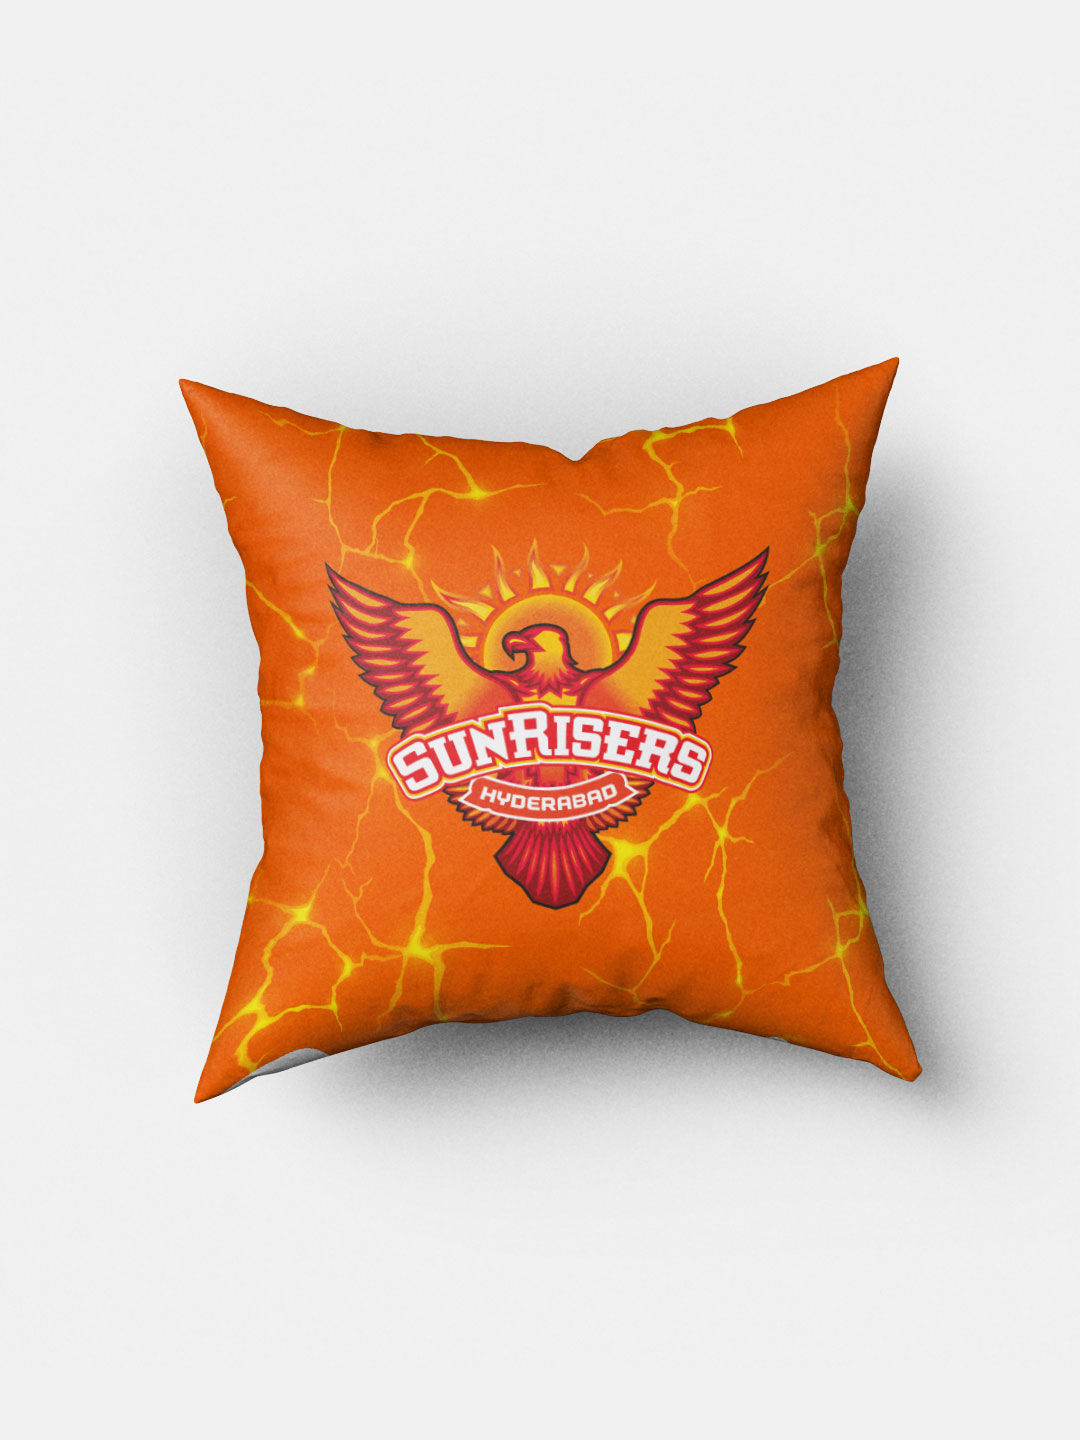 Buy SRH - Square Pillows Pillow Online